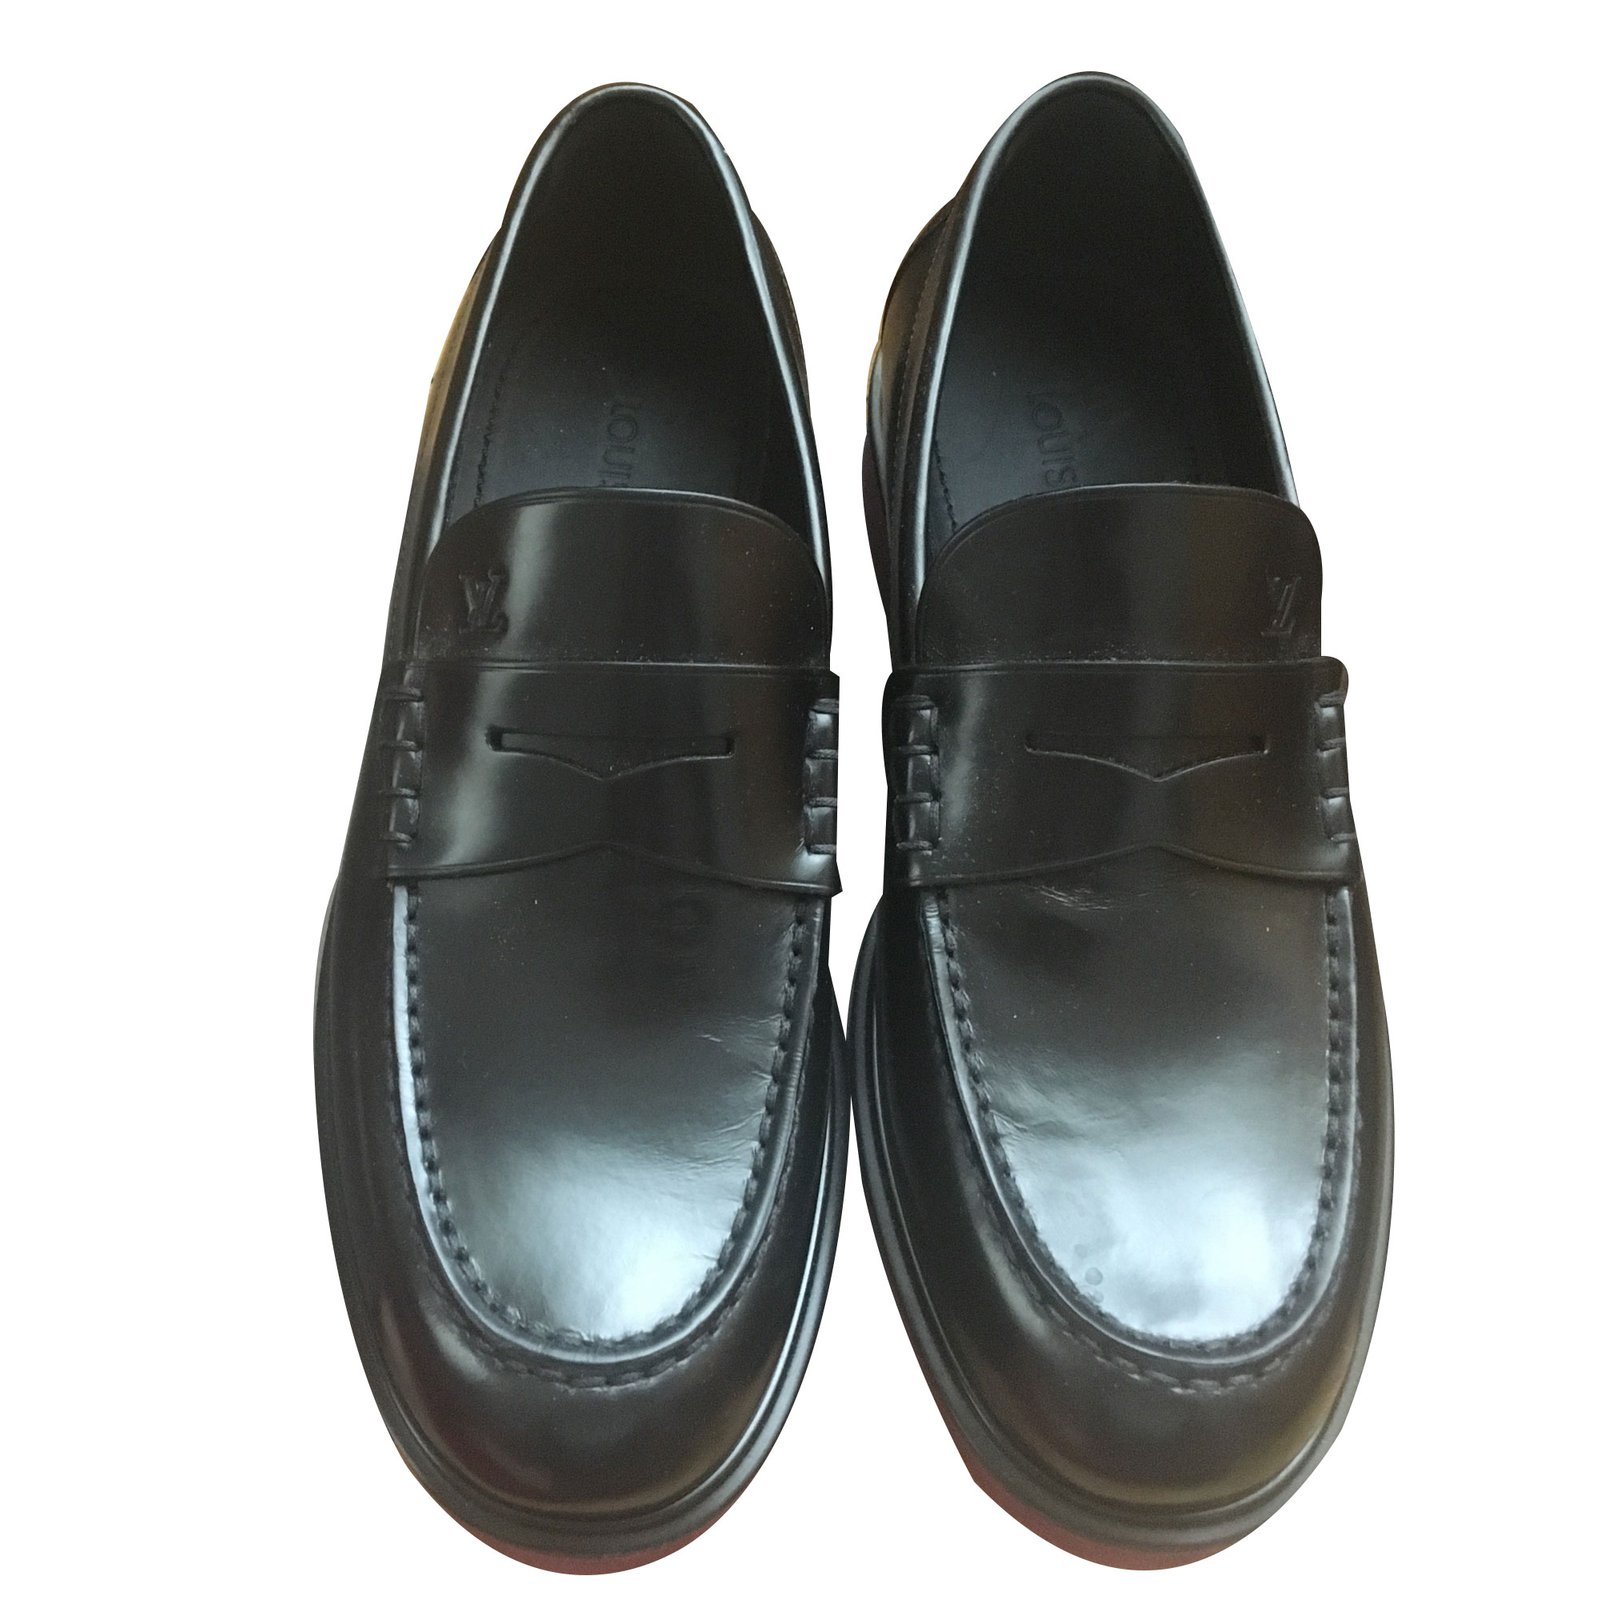 Louis Vuitton, Shoes, Authentic Lv Flat Loafer